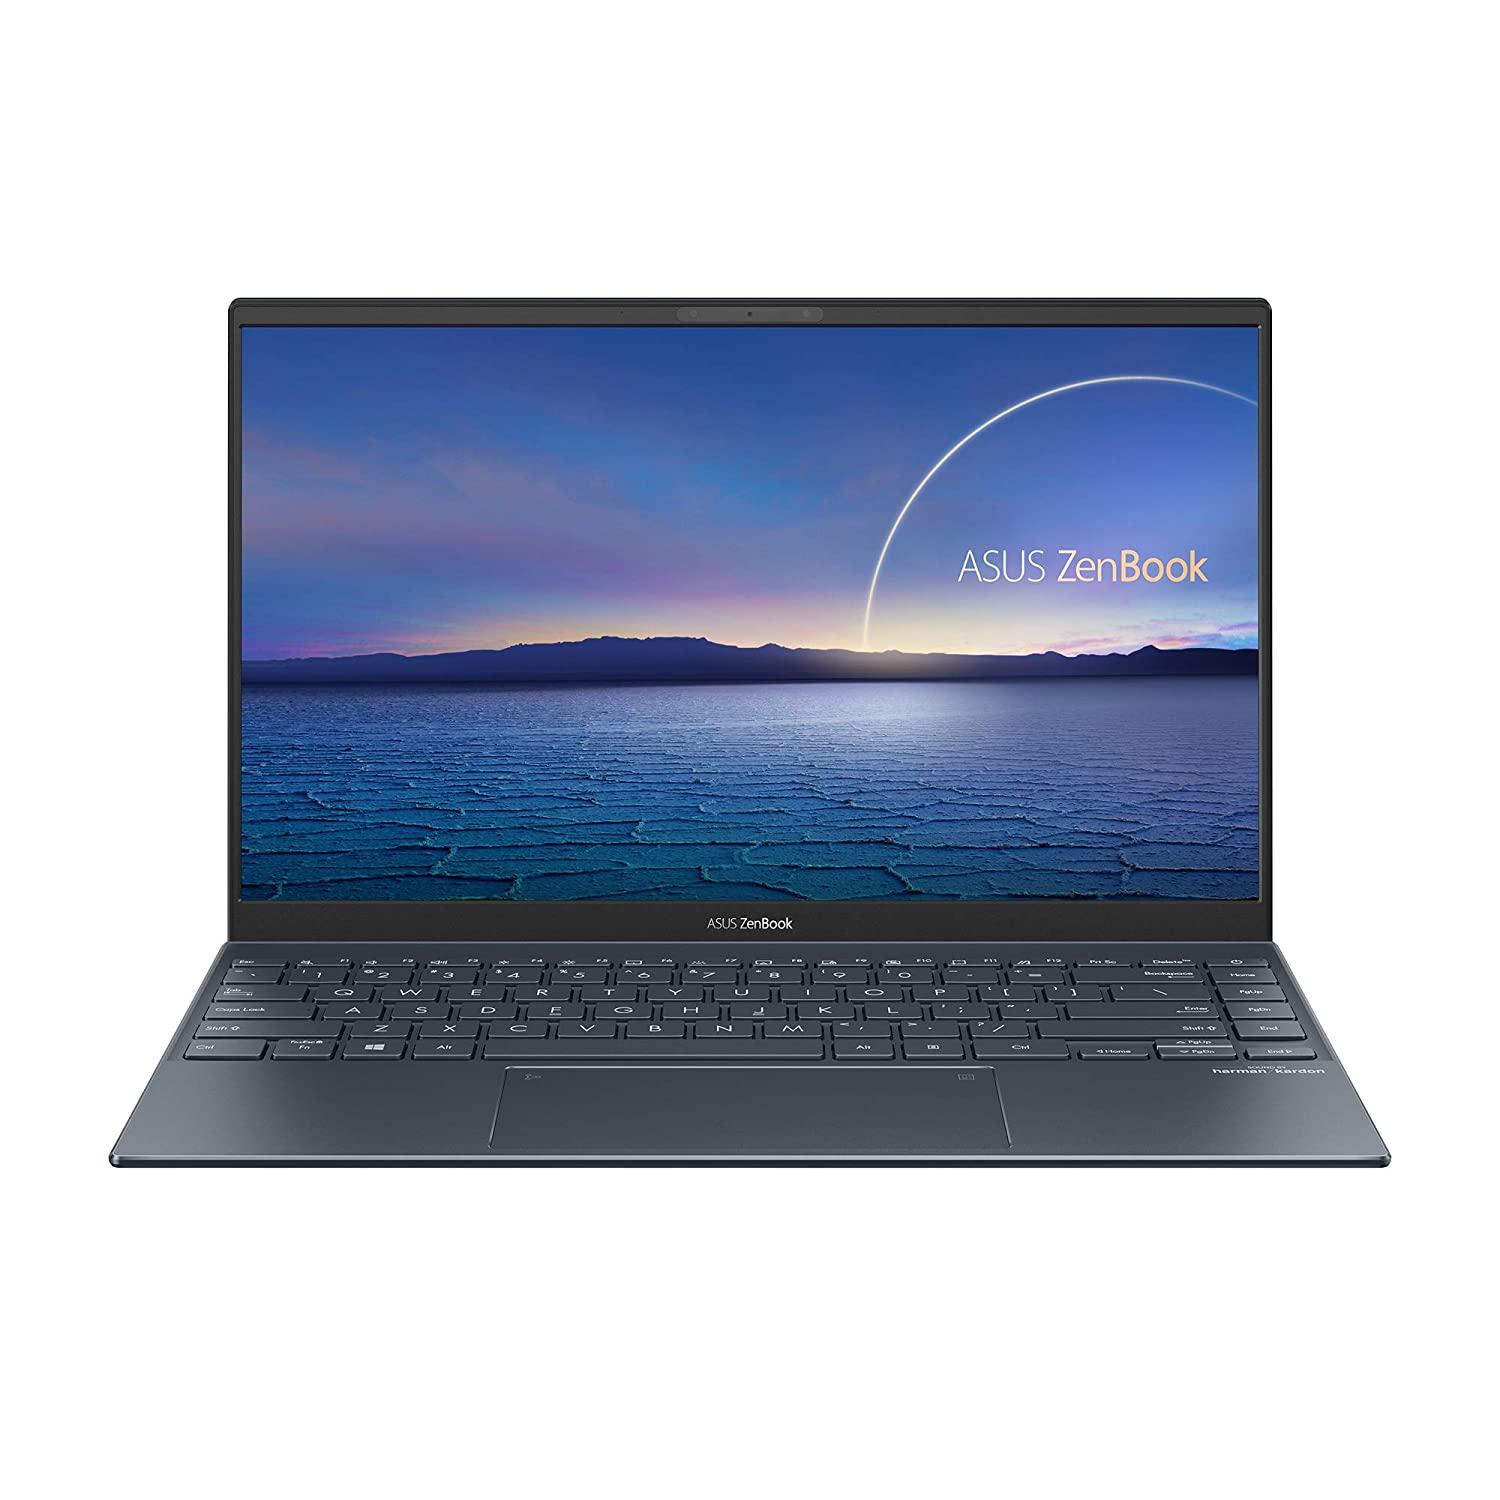 ASUS ZenBook 14 Intel Core i7 11th Gen Laptop